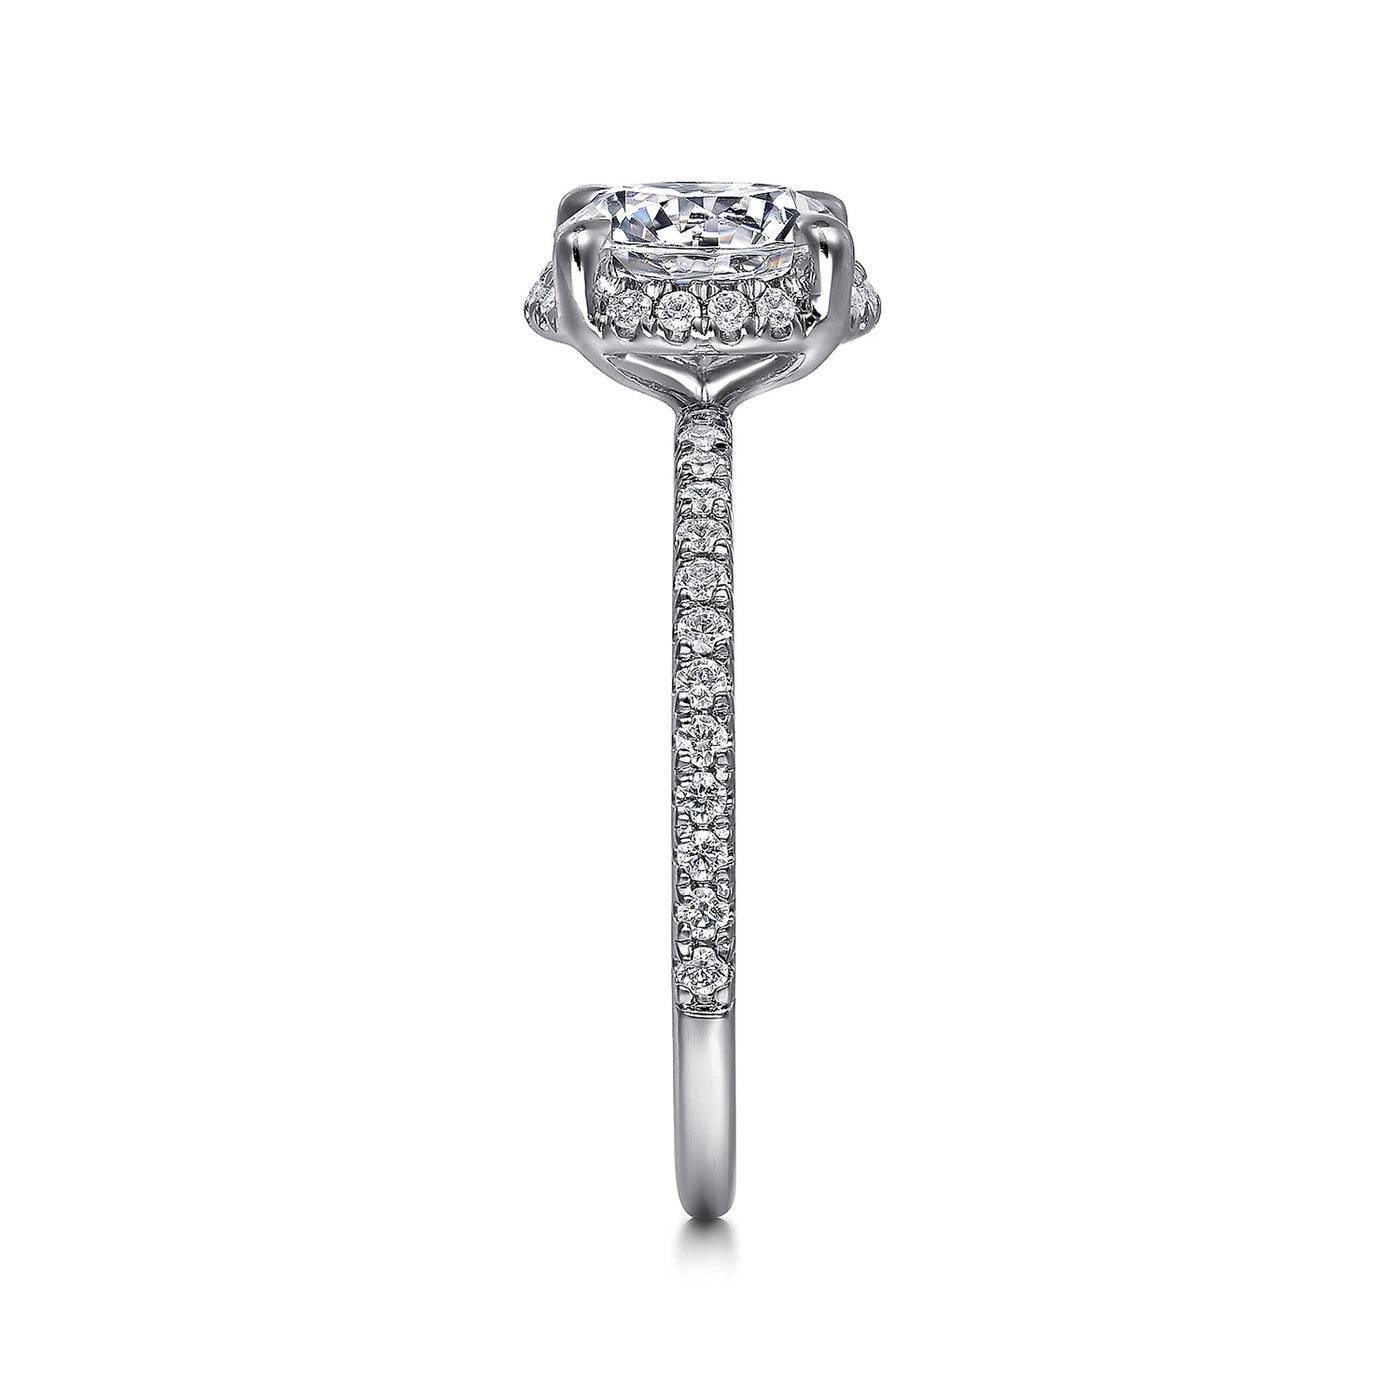 Gabriel & Co. 14k White Gold Hidden Halo Diamond Semi-Mount Engagement Ring – ER14719R6W44JJ.CSCZ